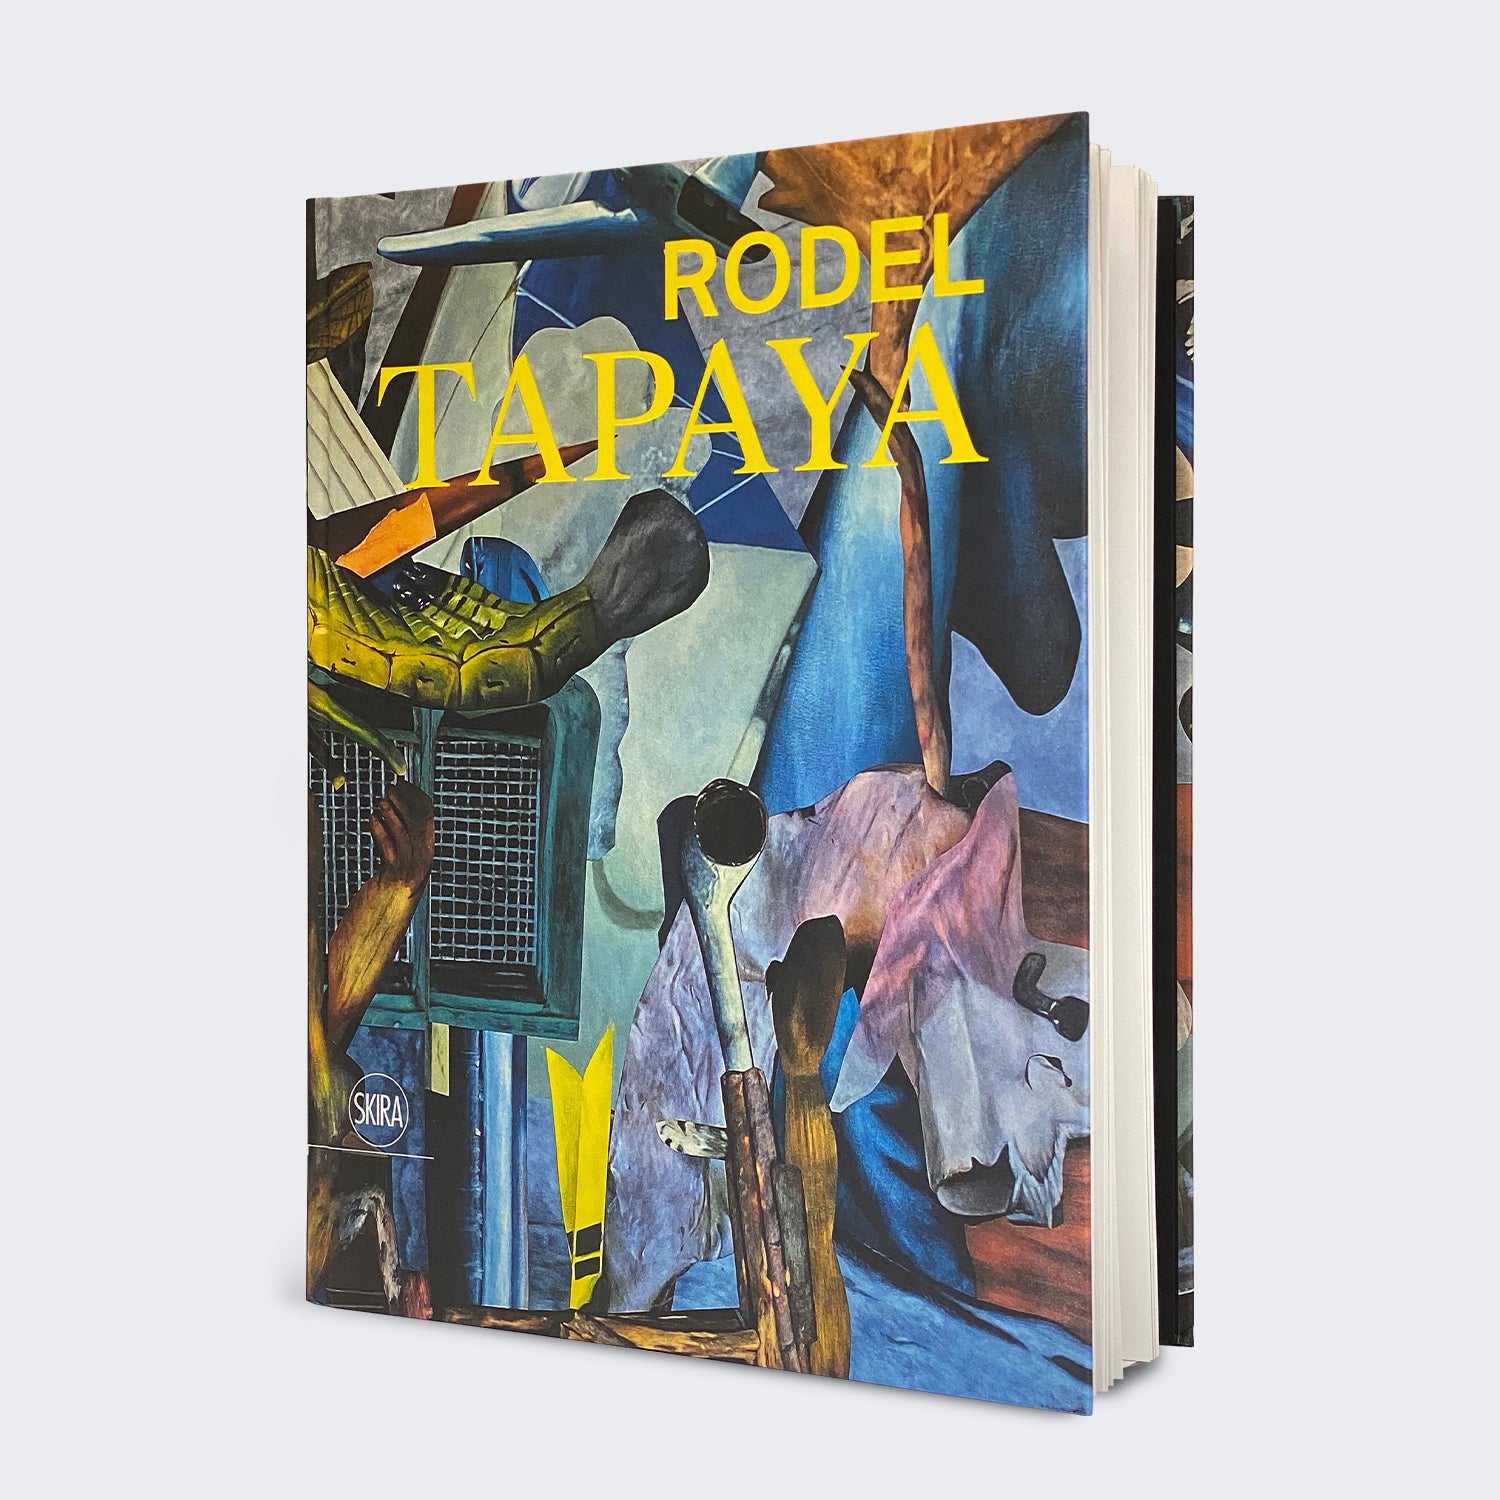 (Hardcover)　SKIRA　–　STUDIOS,　Rodel　by　ISTORYA　Tapaya　INC.